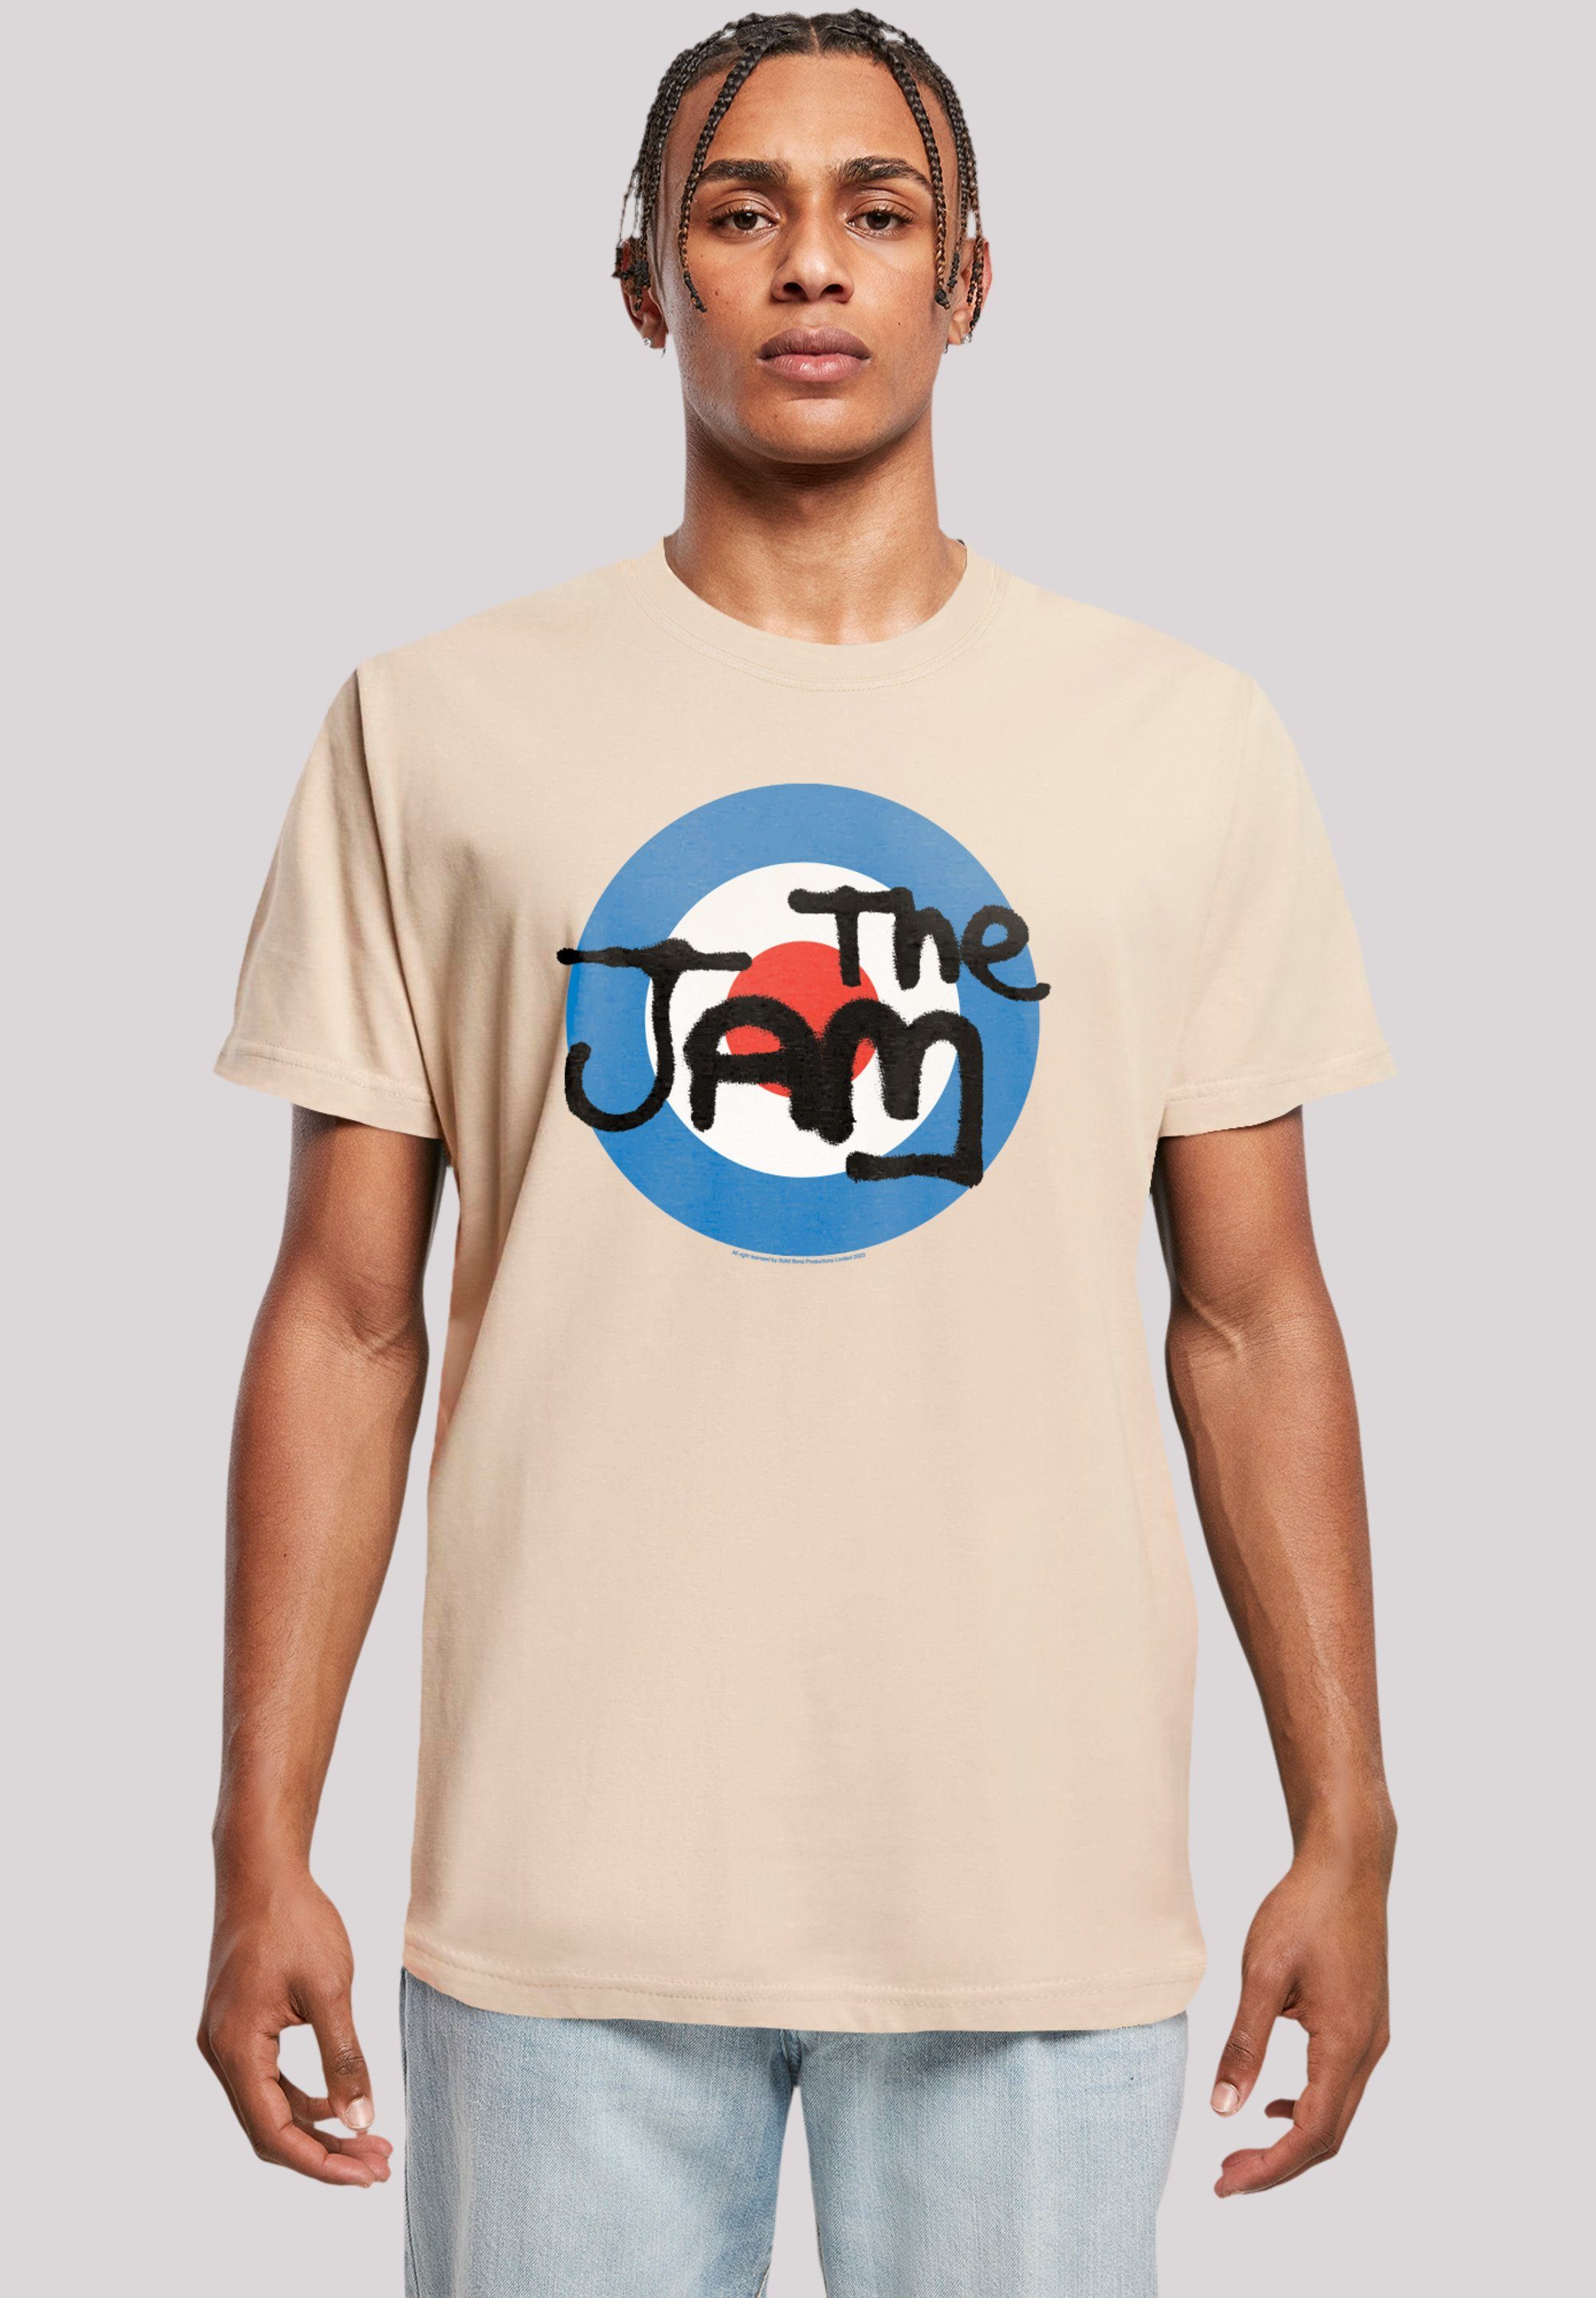 F4NT4STIC T-Shirt The Jam Band Classic Logo Premium Qualität, Rippbündchen  am Hals und Doppelnähte am Saum | T-Shirts